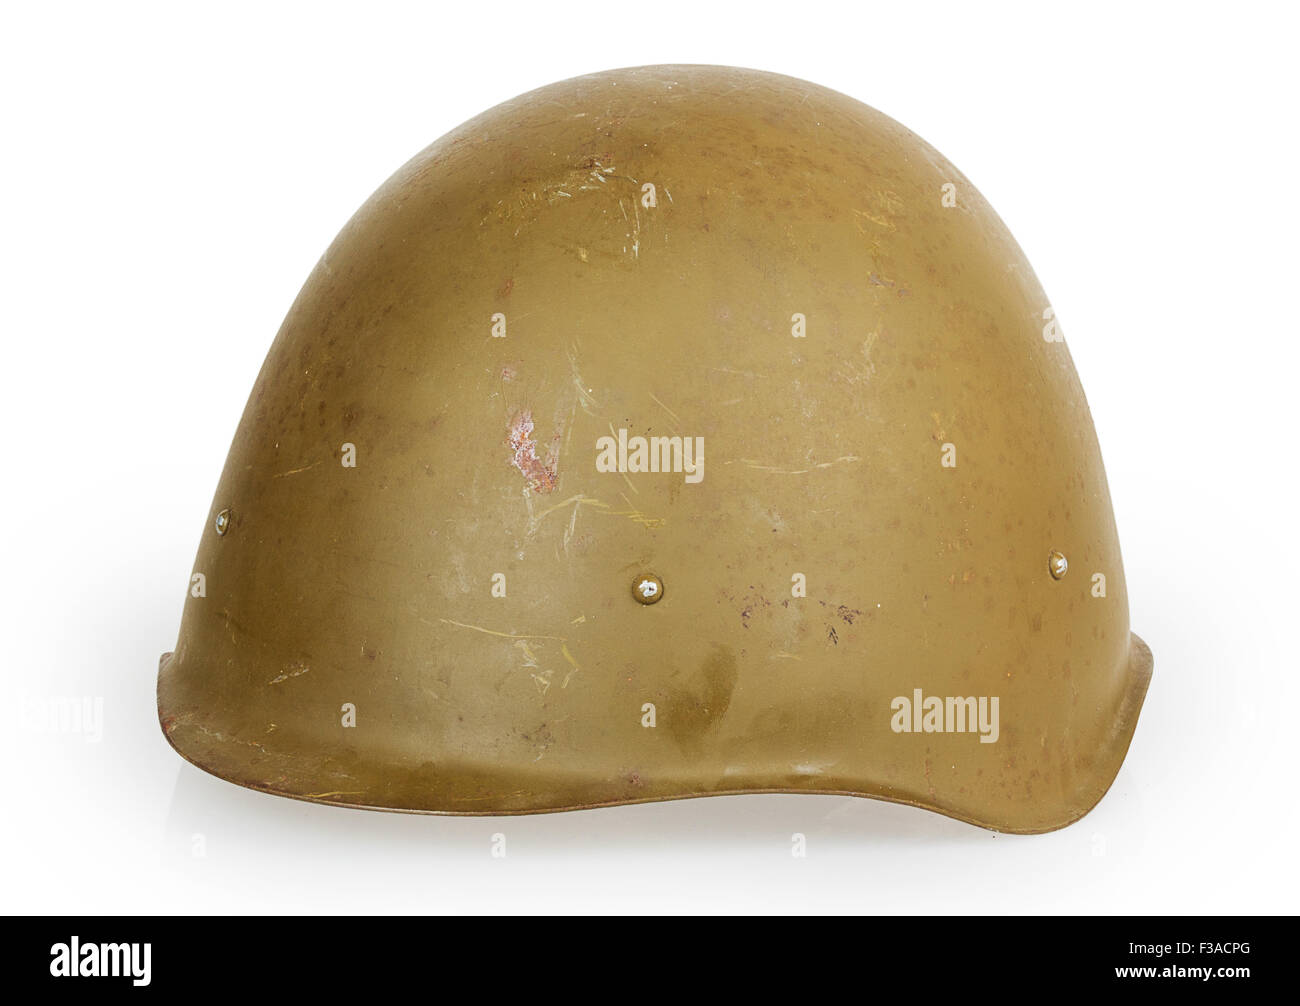 army helmet isolated on white background Stock Photo